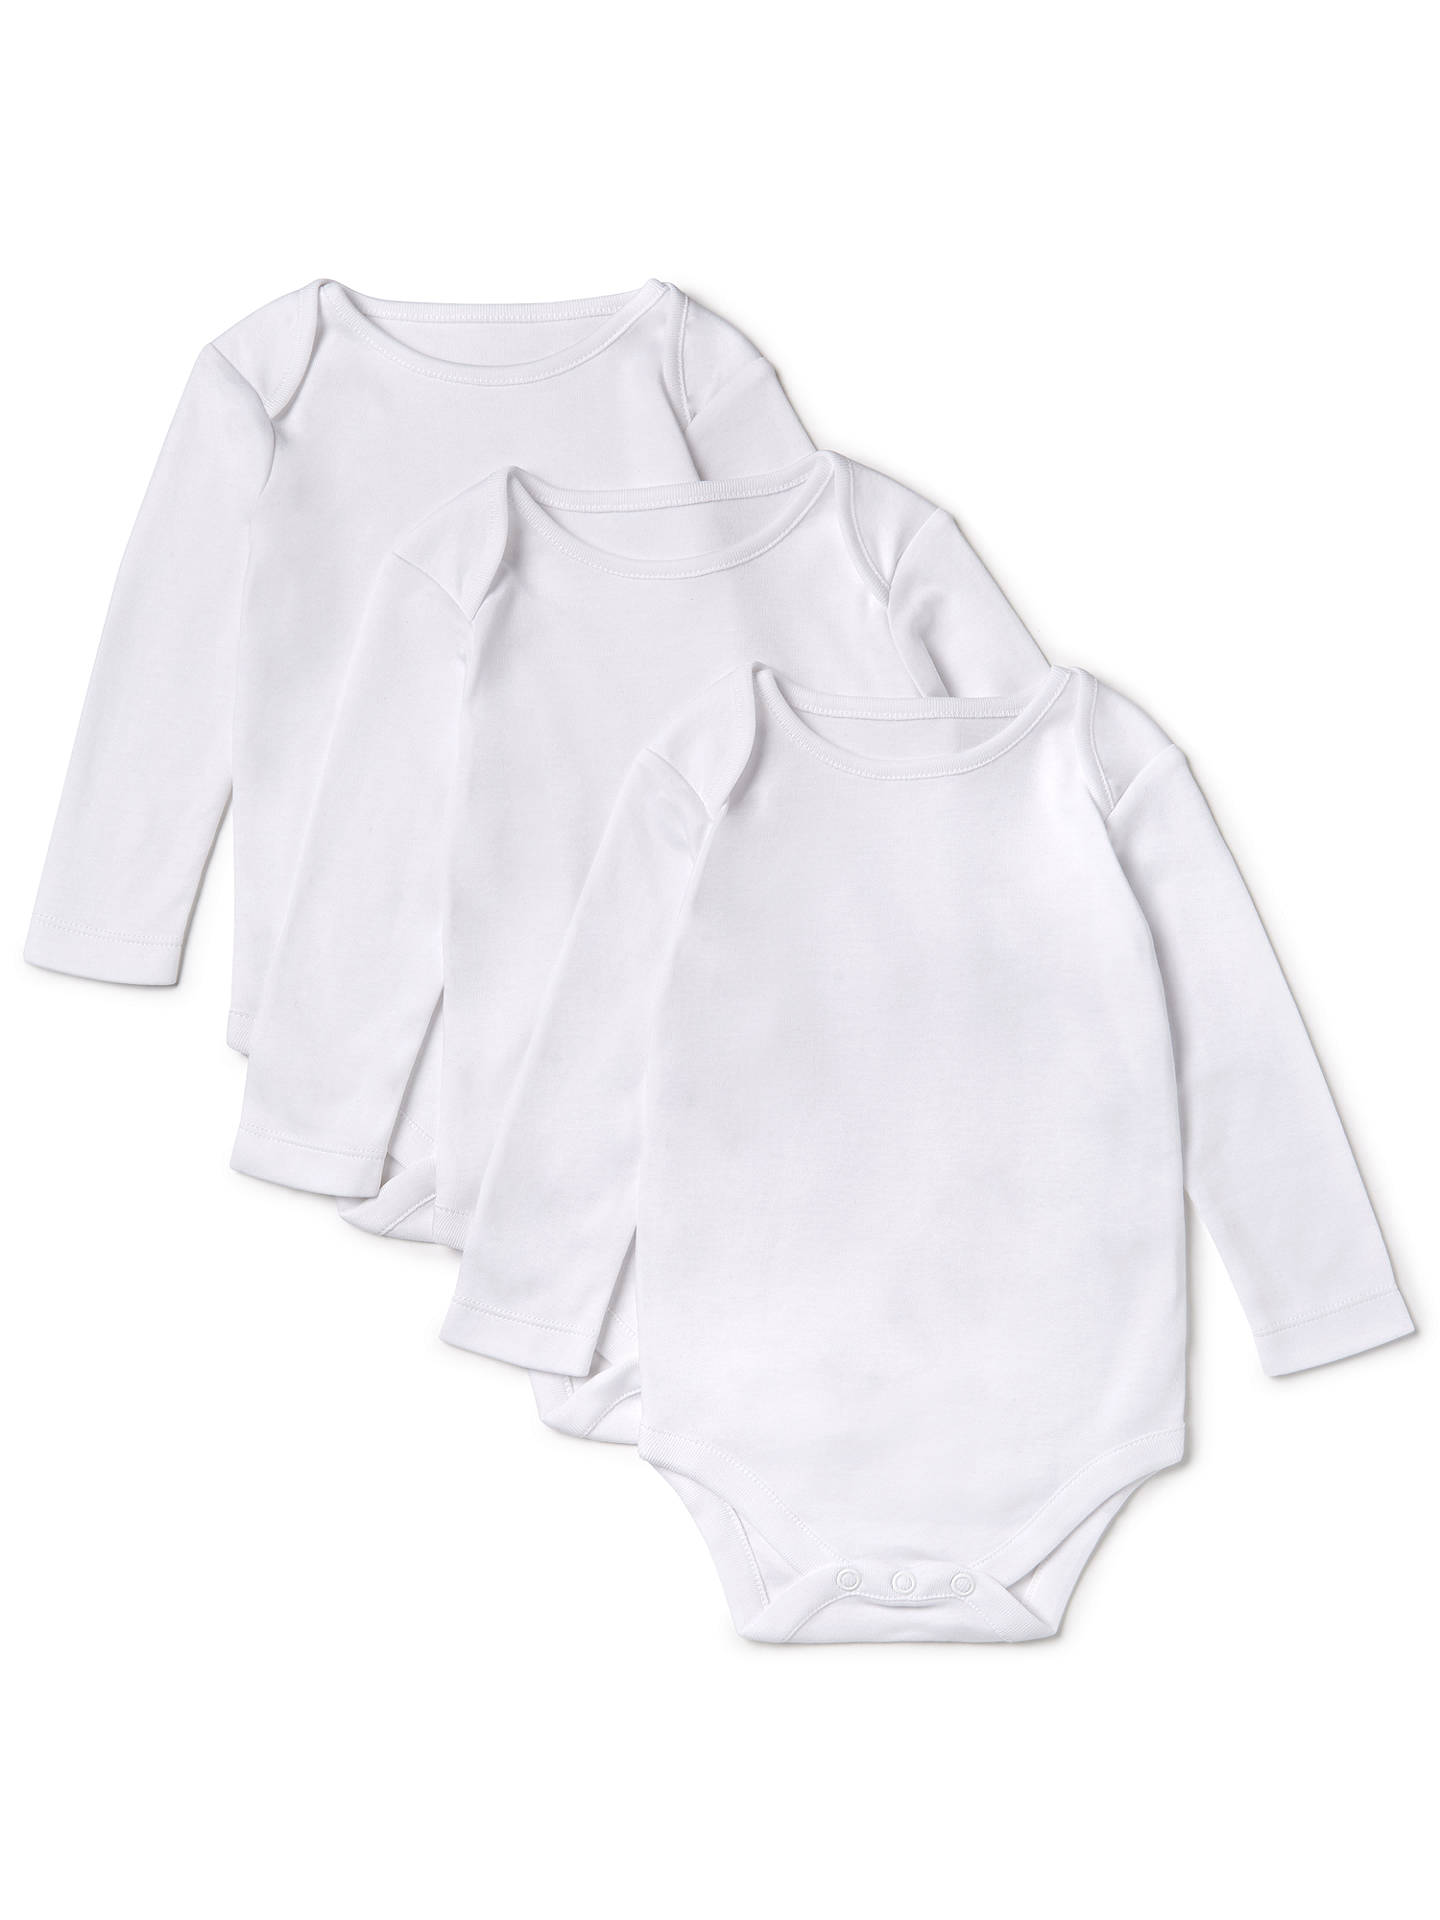 John Lewis & Partners Baby Pima Cotton Long Sleeve Bodysuit, Pack of 3 ...